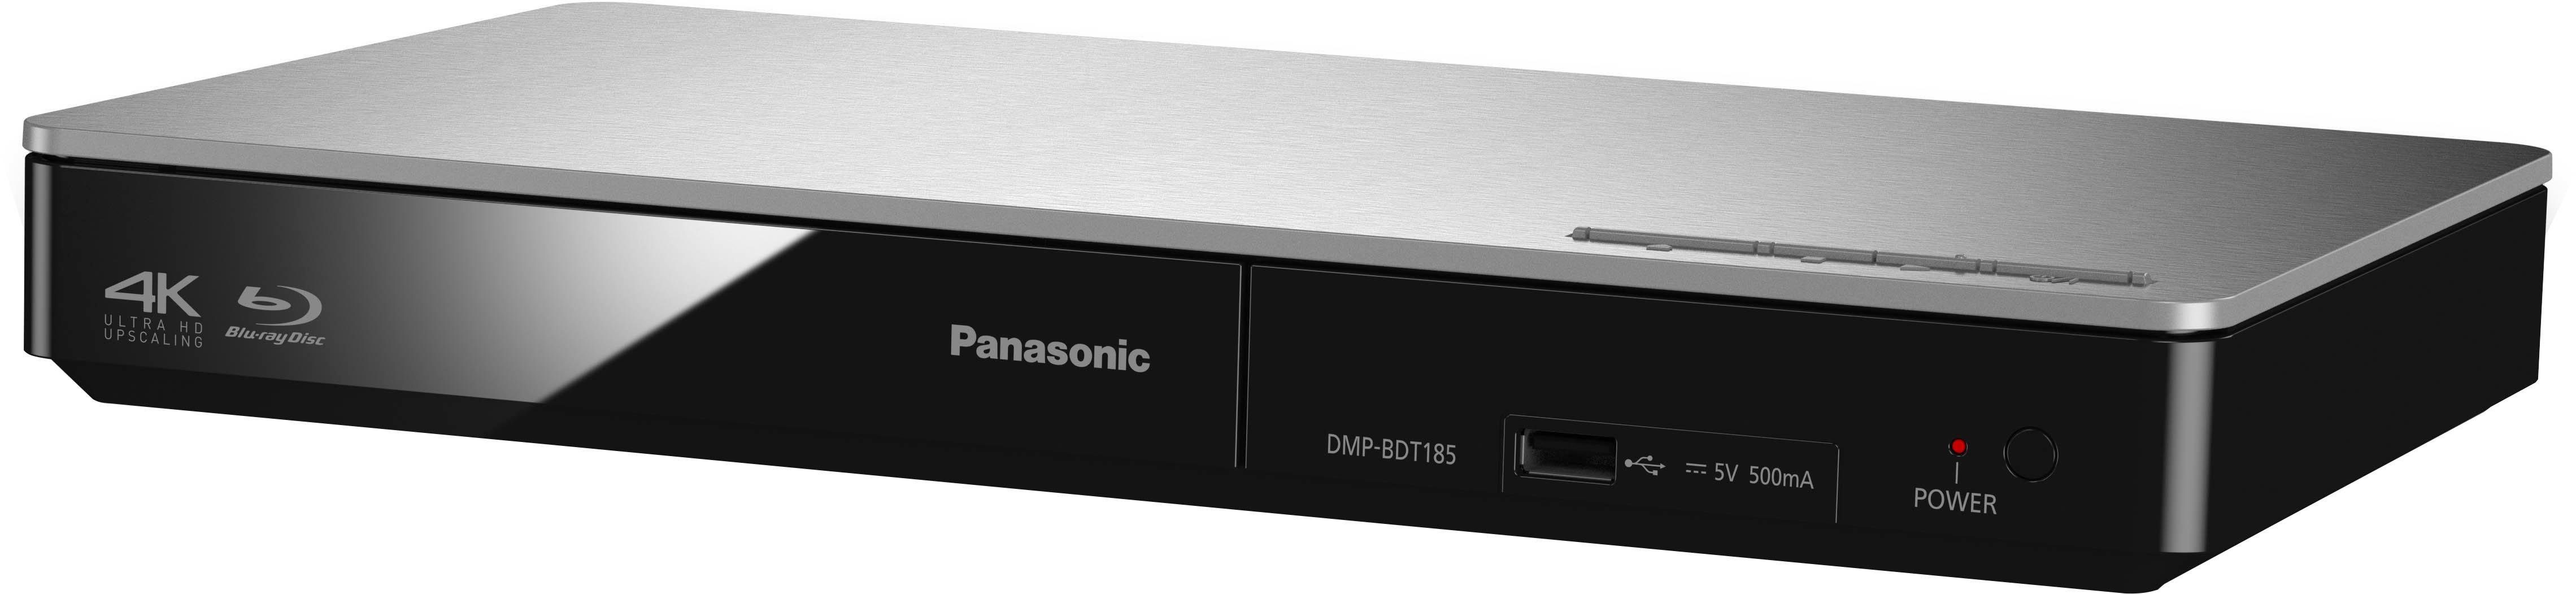 Panasonic Blu-rayspeler DMP-BDT184 / DMP-BDT185